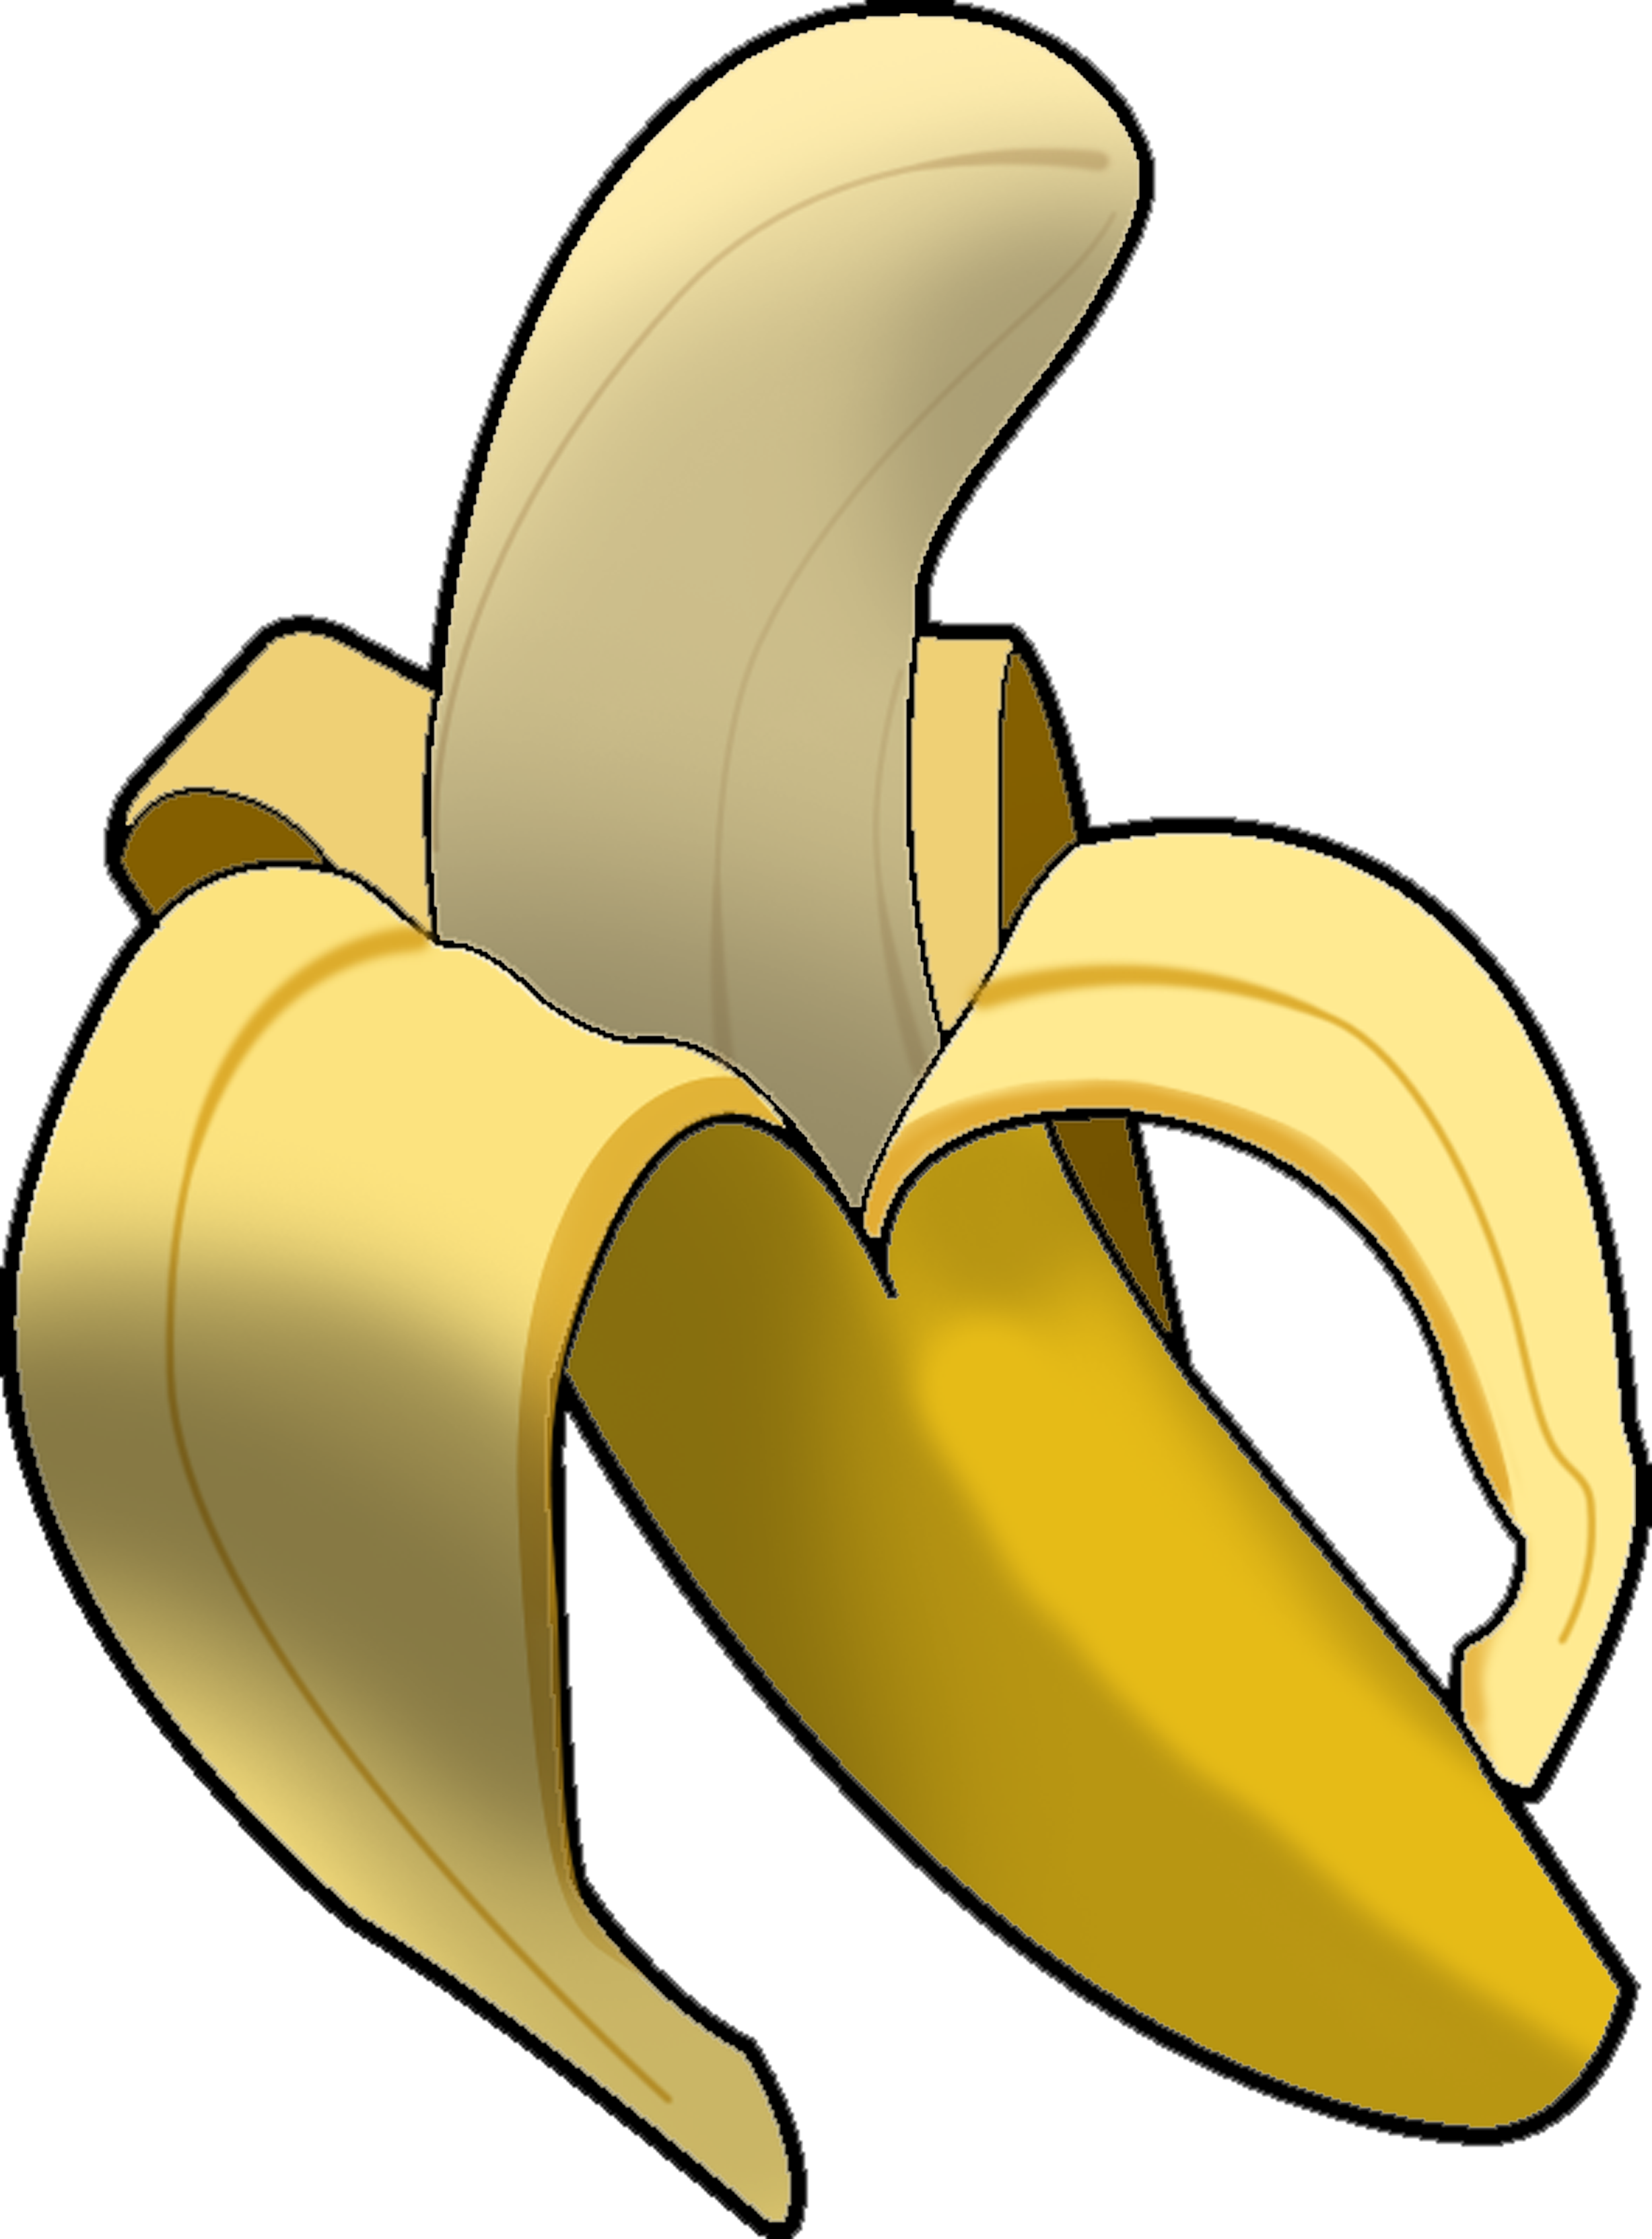 Plantain Banana image - vector clip art online, royalty free ...